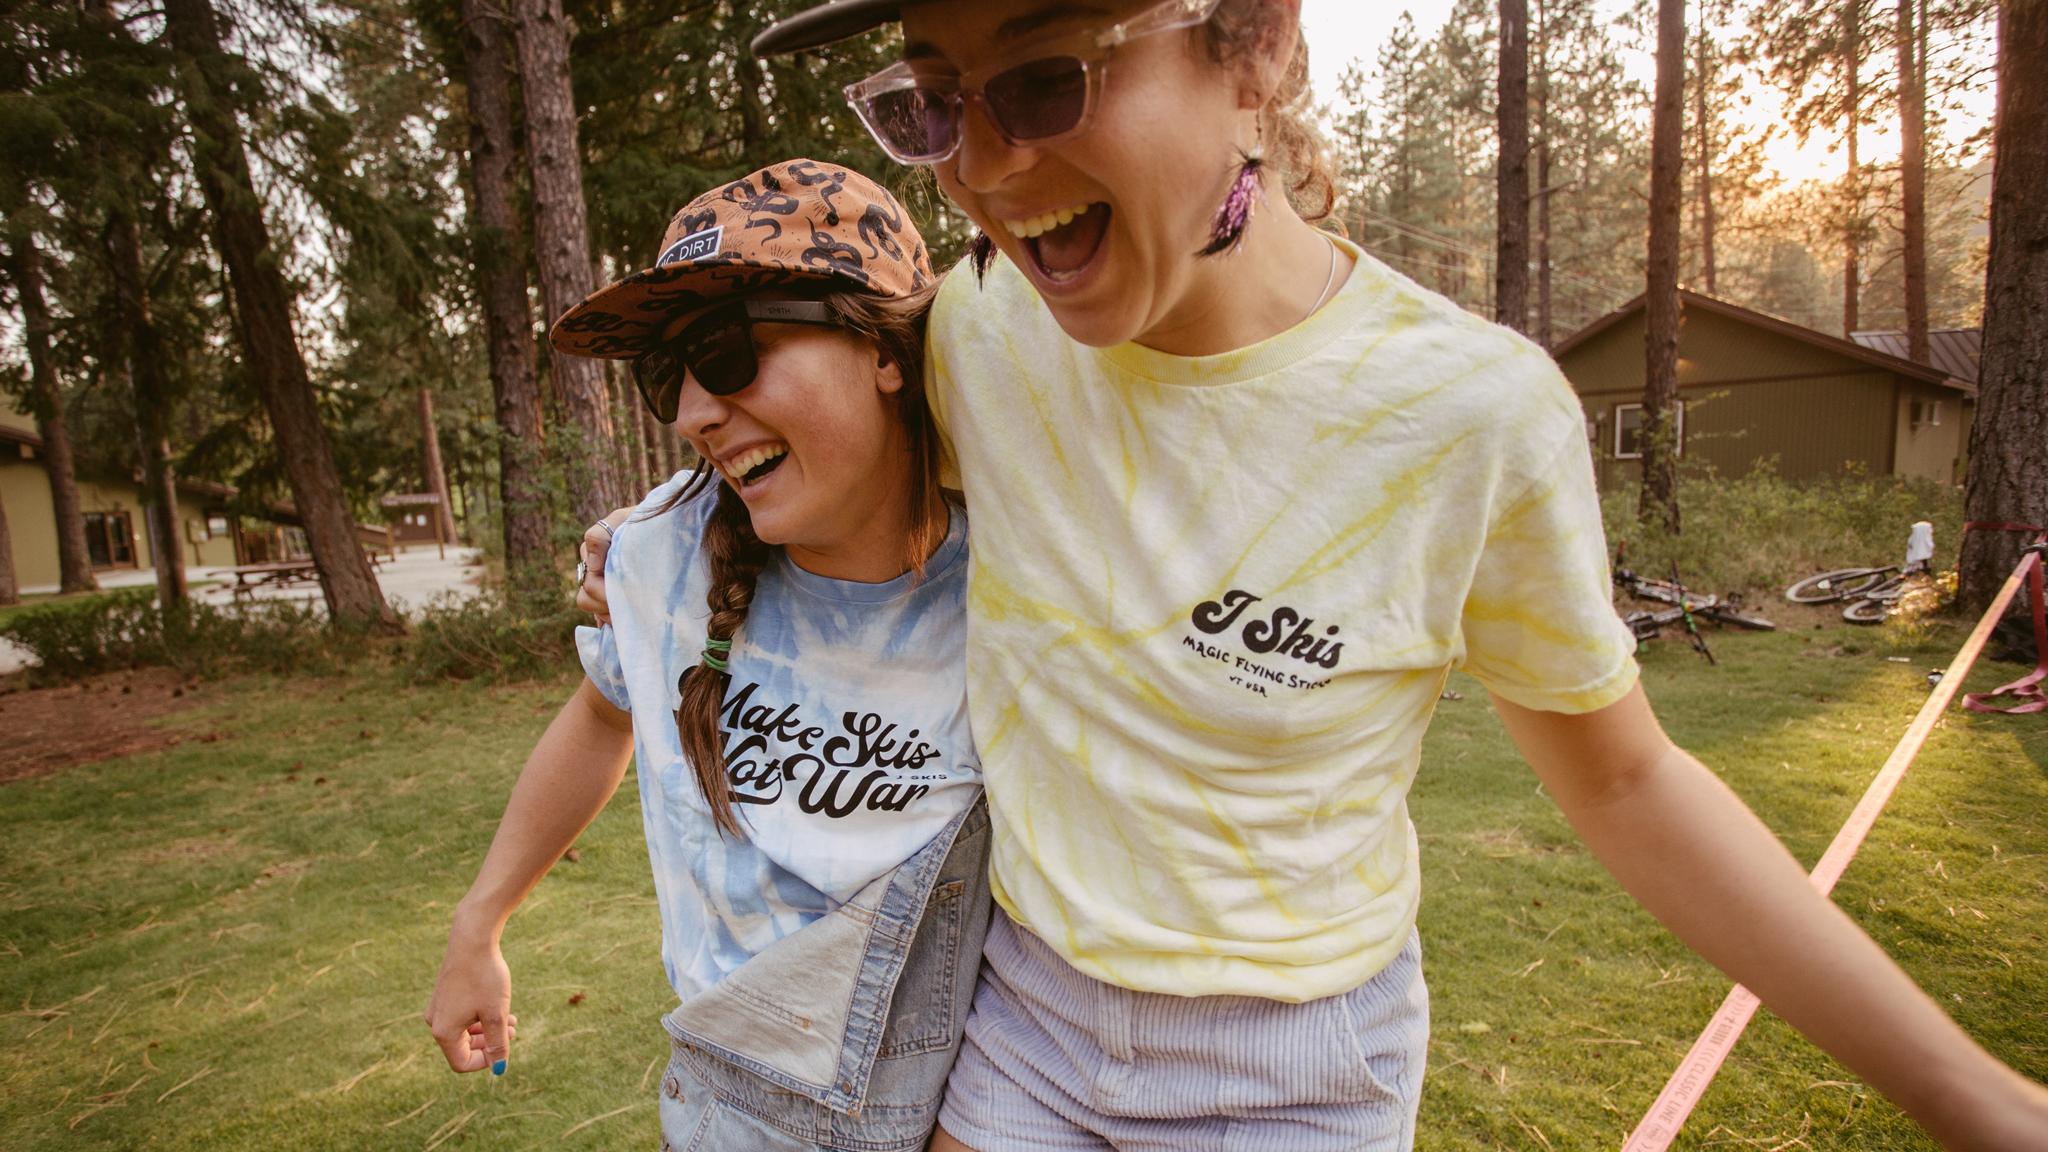 Two girls walking on a slack line wearing tye-die J skis t-shirts